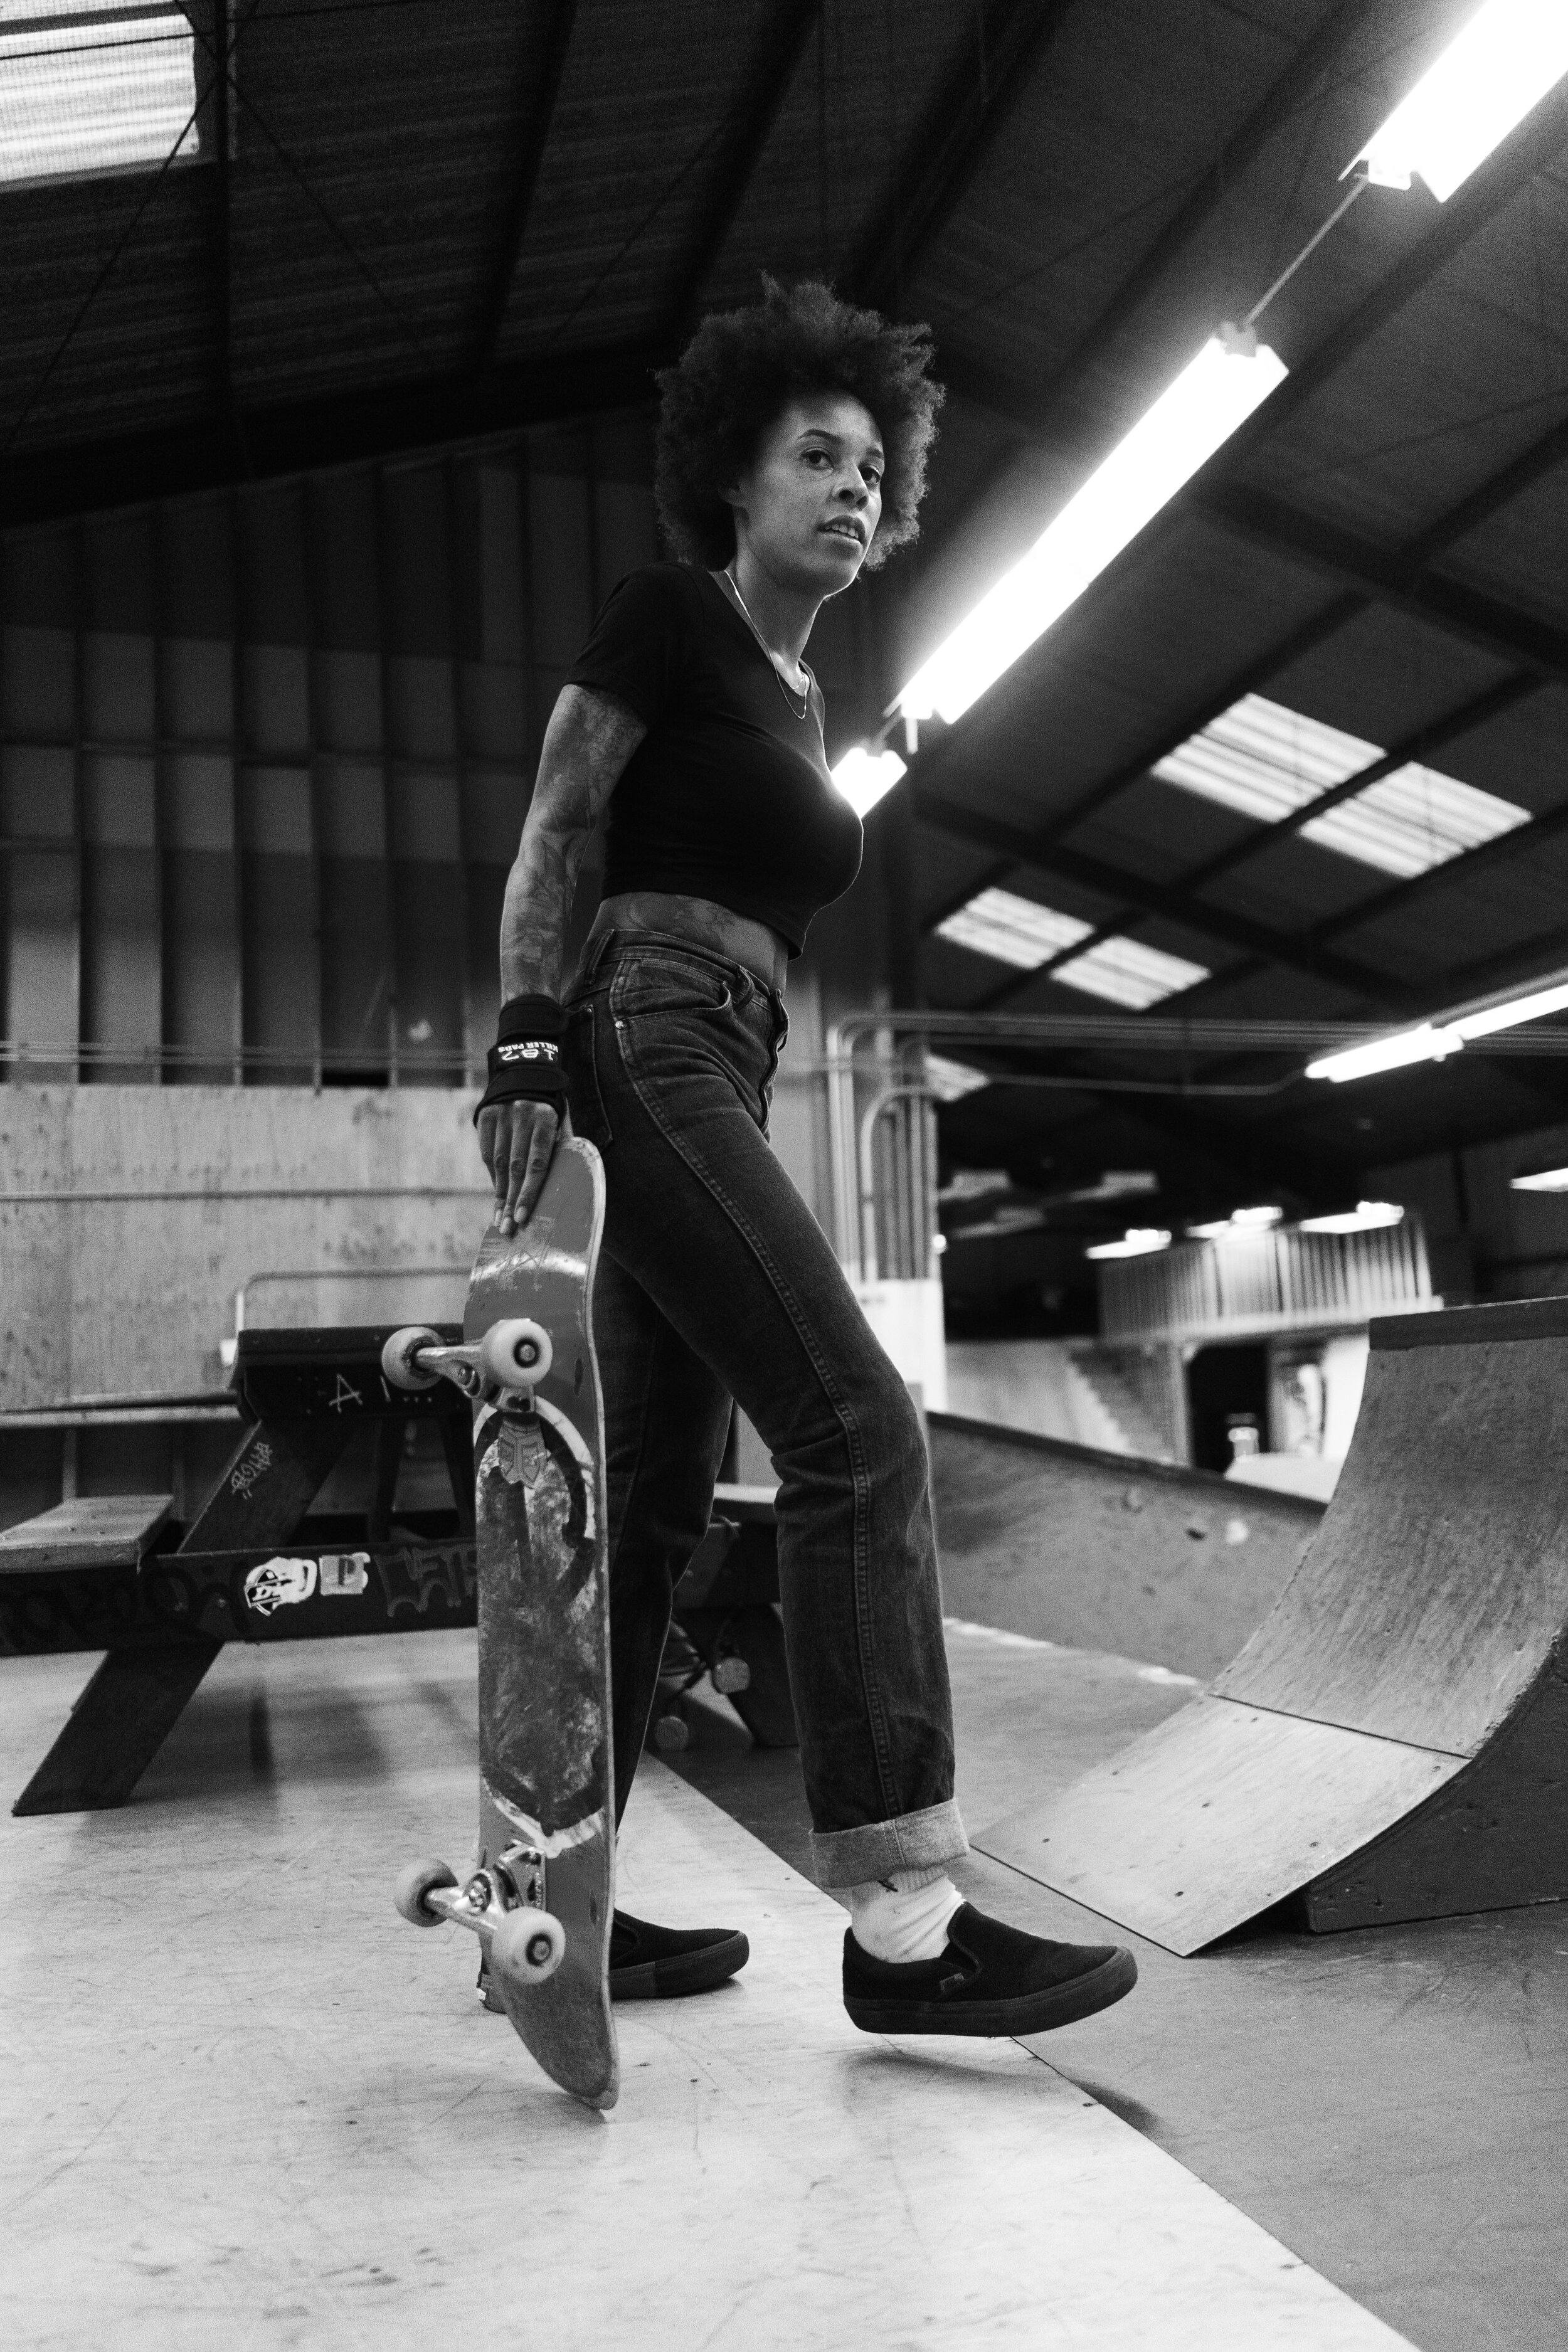  Marsha Howard for Skateism - San Francisco, CA 